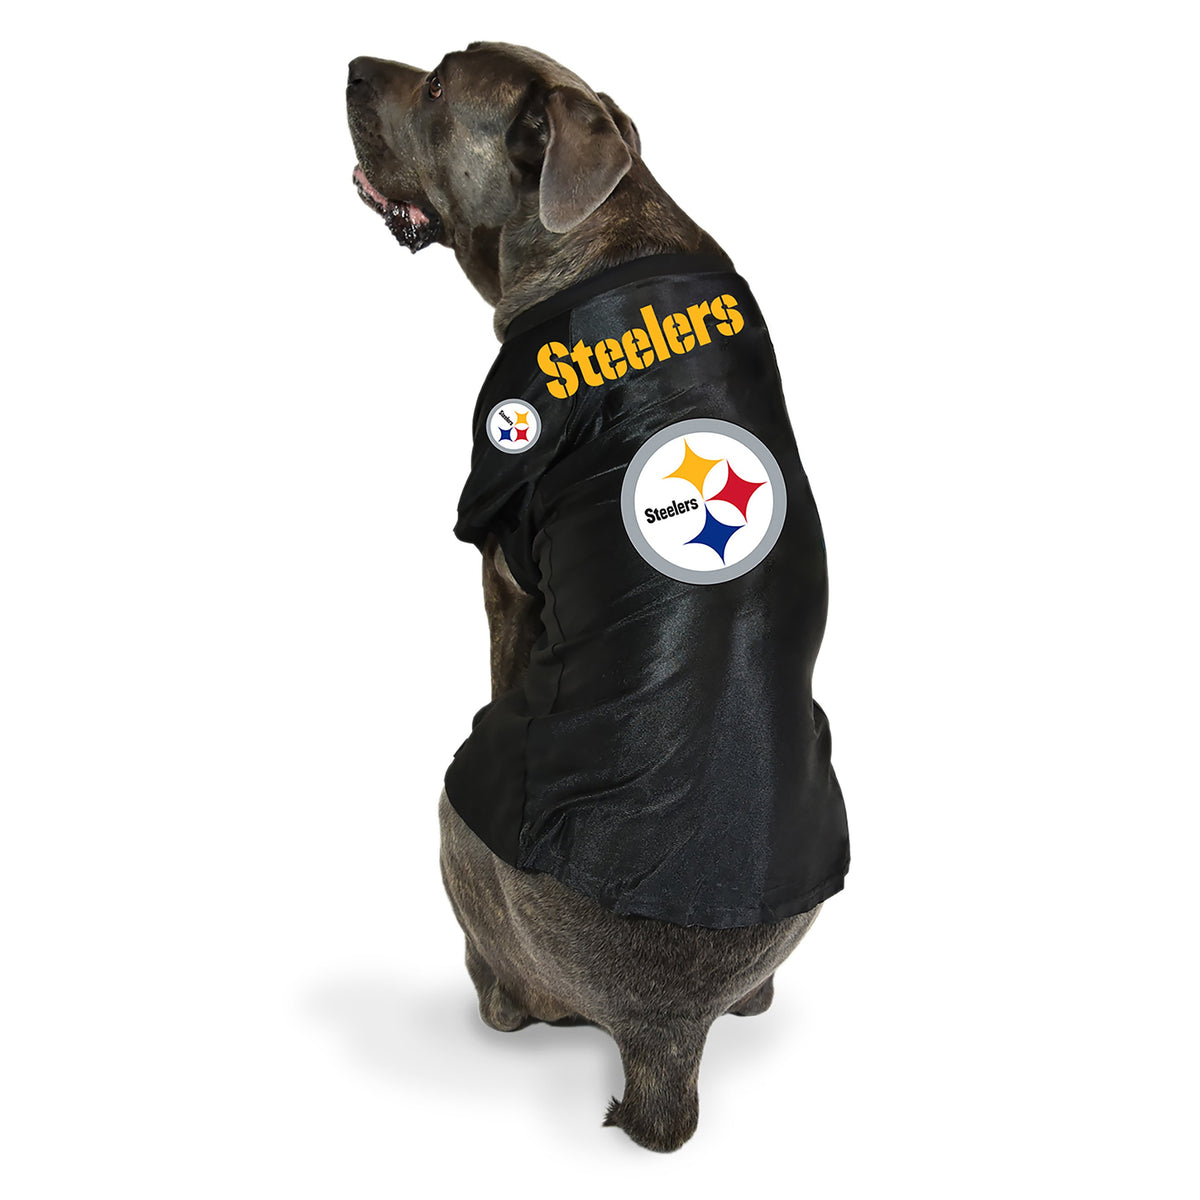 MLB Pittsburgh Pirates Dog T-Shirt, Medium. - Licensed Shirt for Pets Team